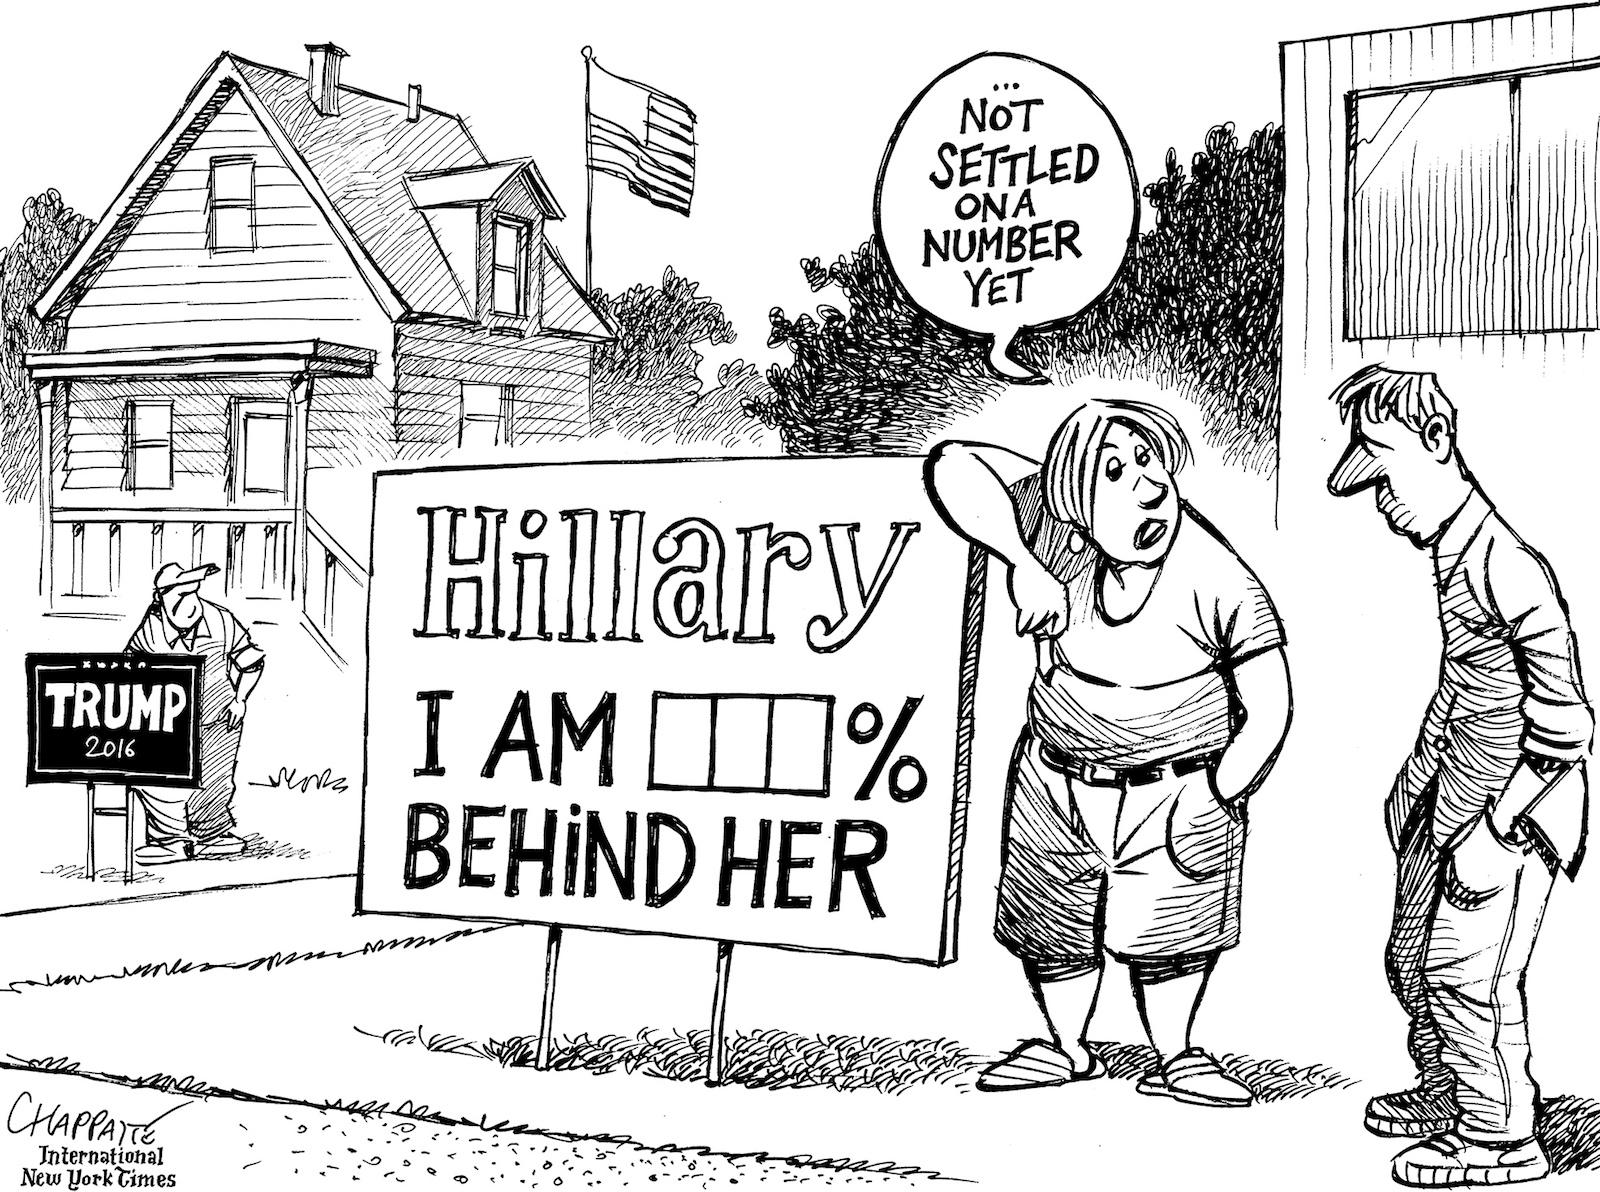 Behind Hillary Clinton